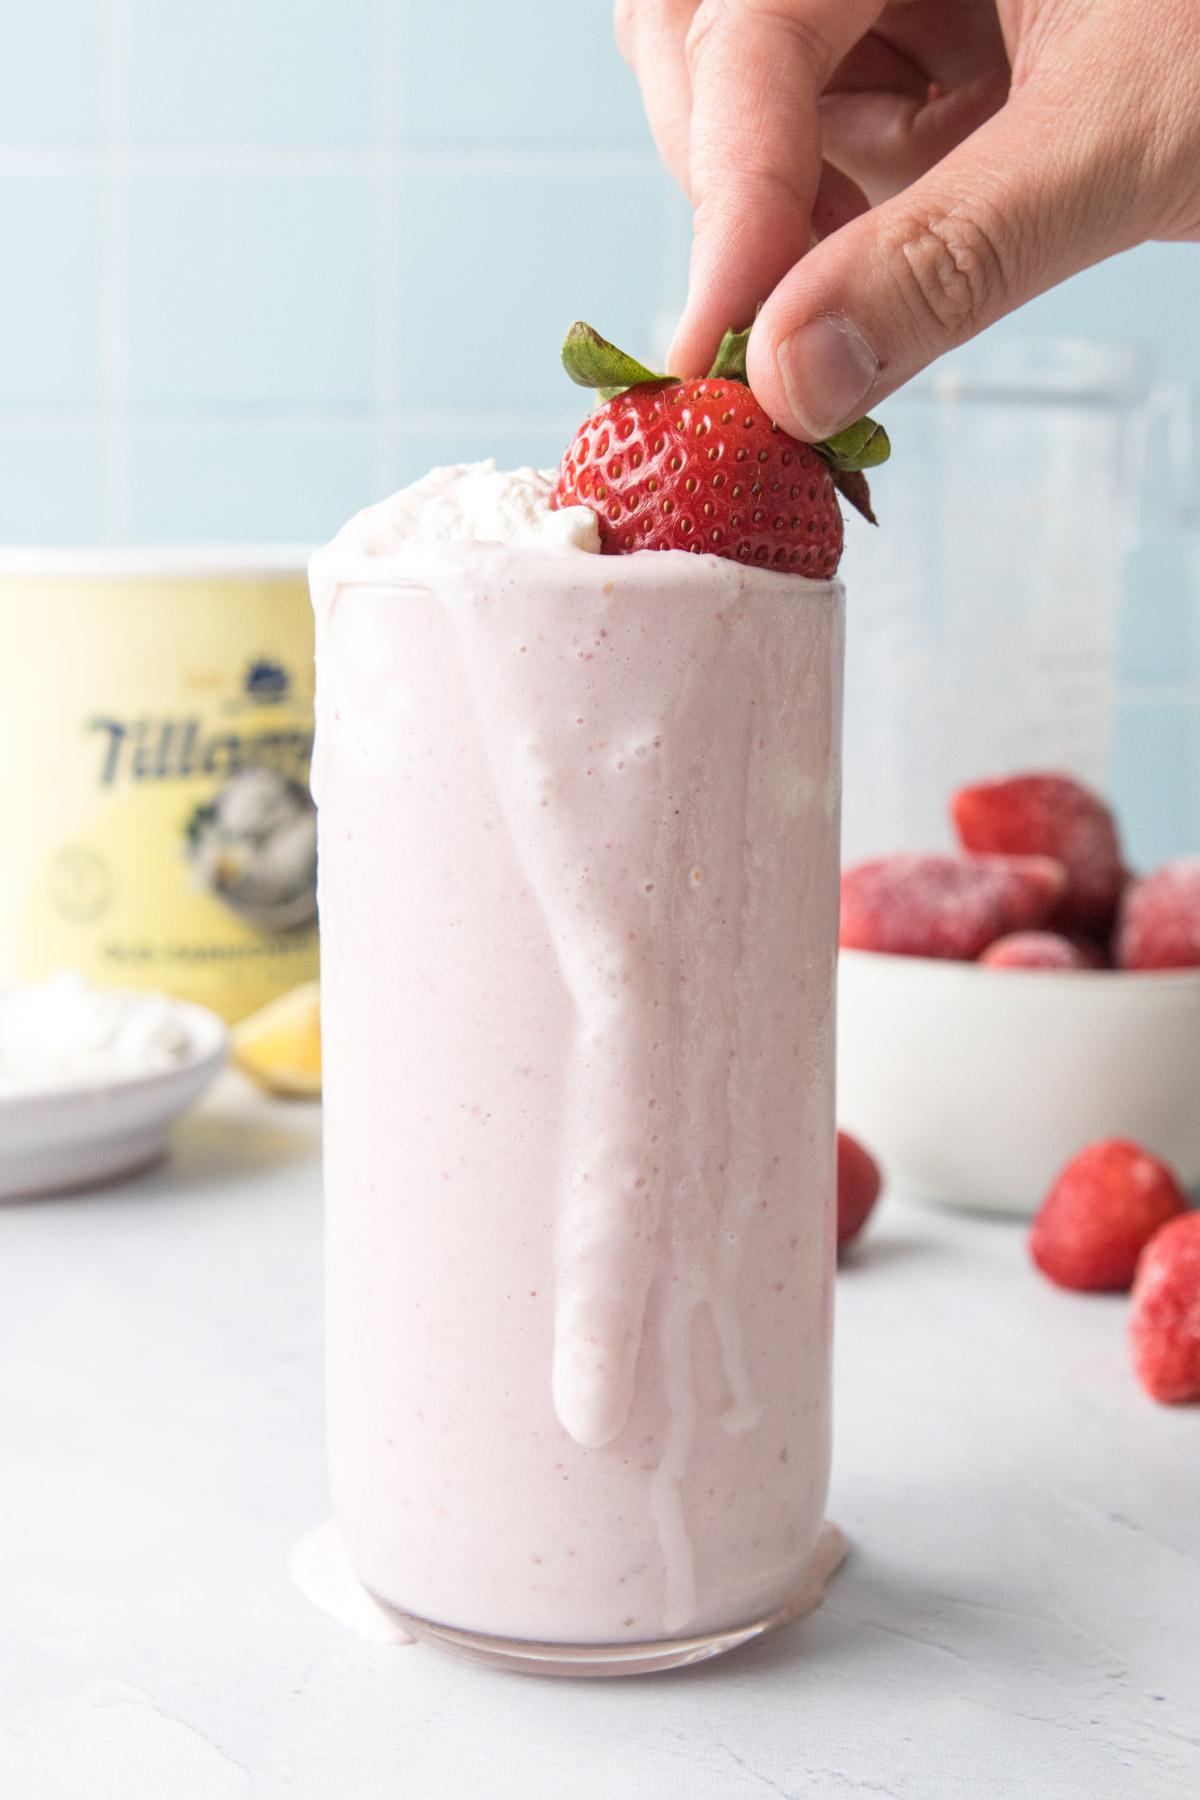 strawberry banana milkshake with whipped cream and strawberry on top.